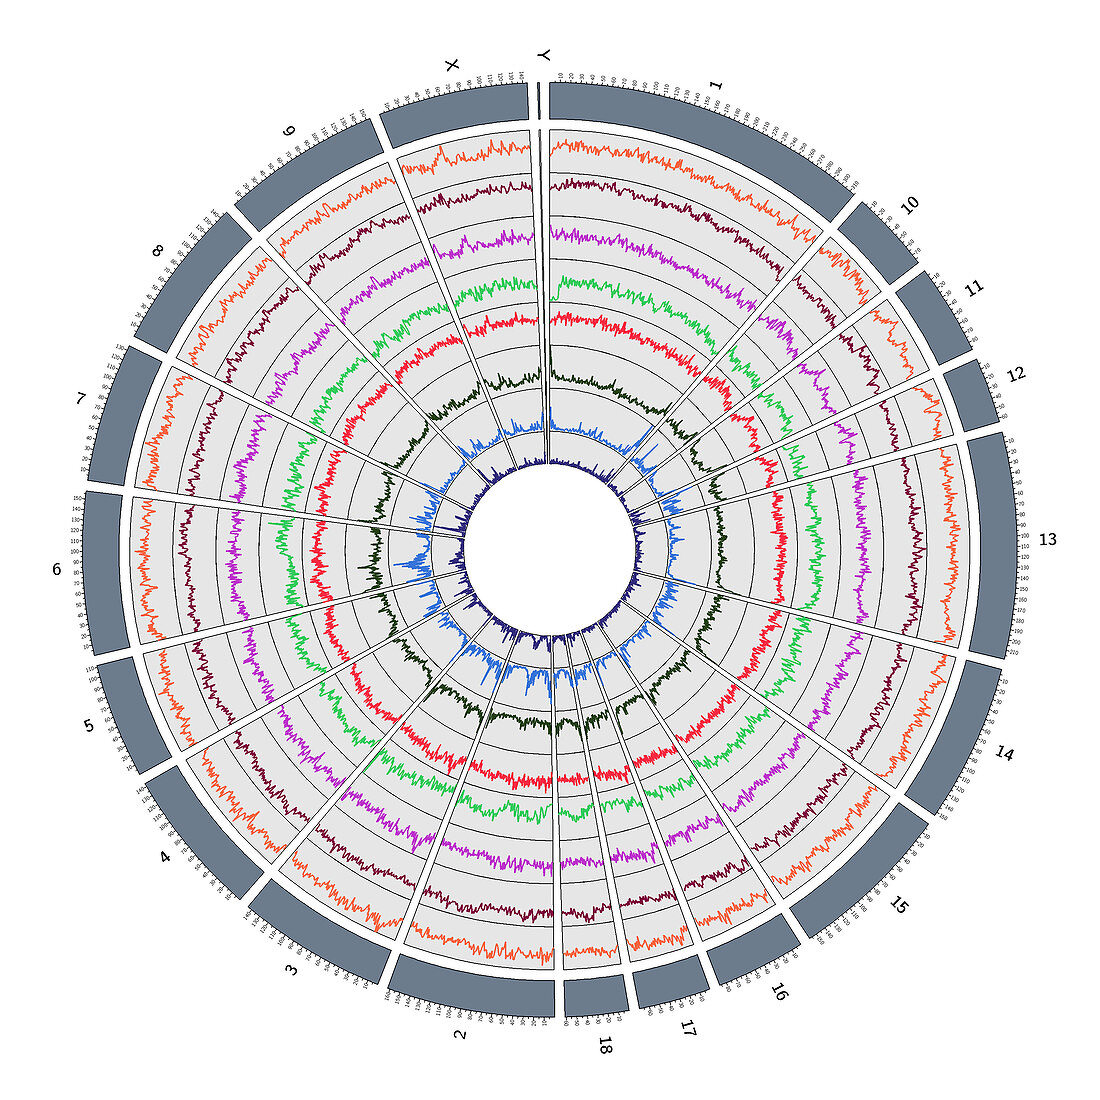 Circos, Circular Genome Map, Pig